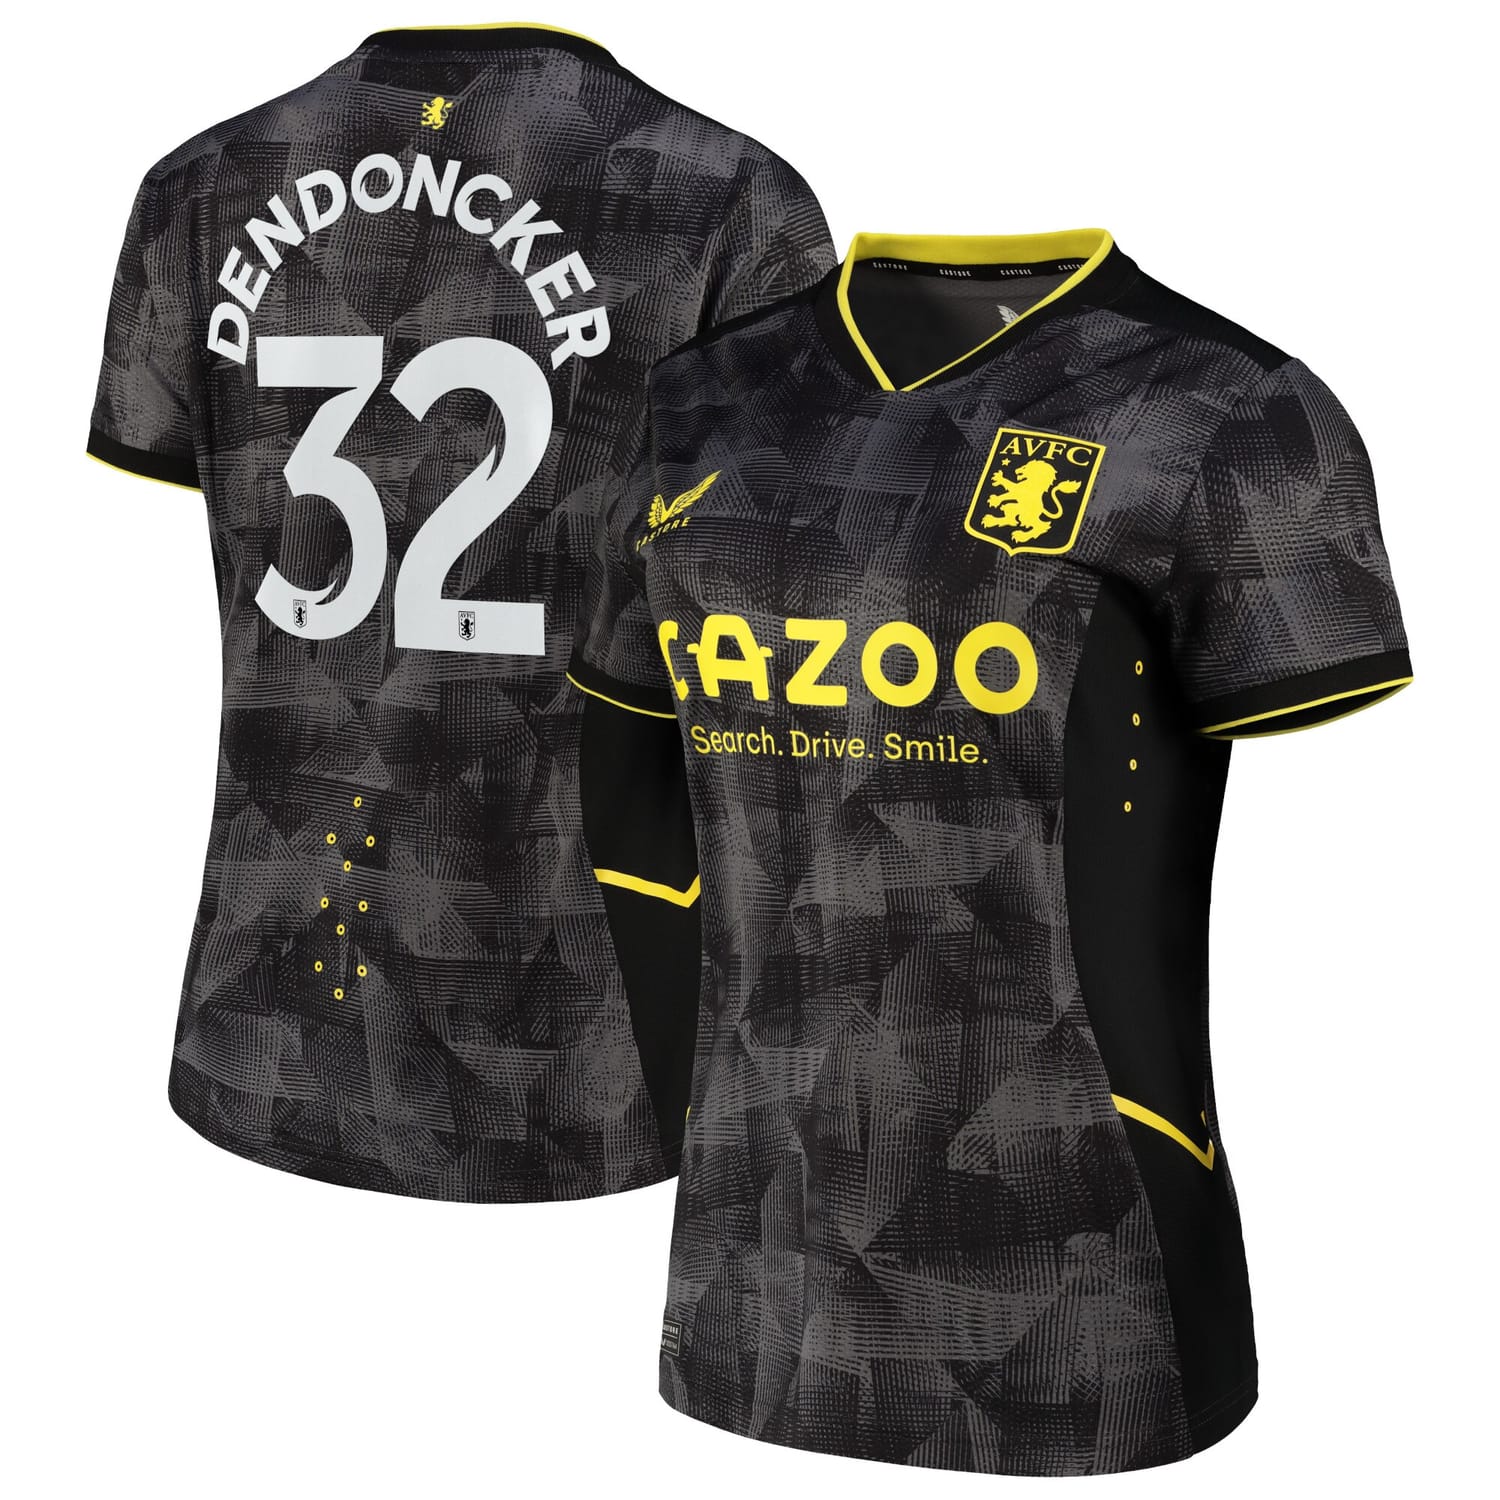 Premier League Aston Villa Third Cup Pro Jersey Shirt 2022-23 player Leander Dendoncker 32 printing for Women